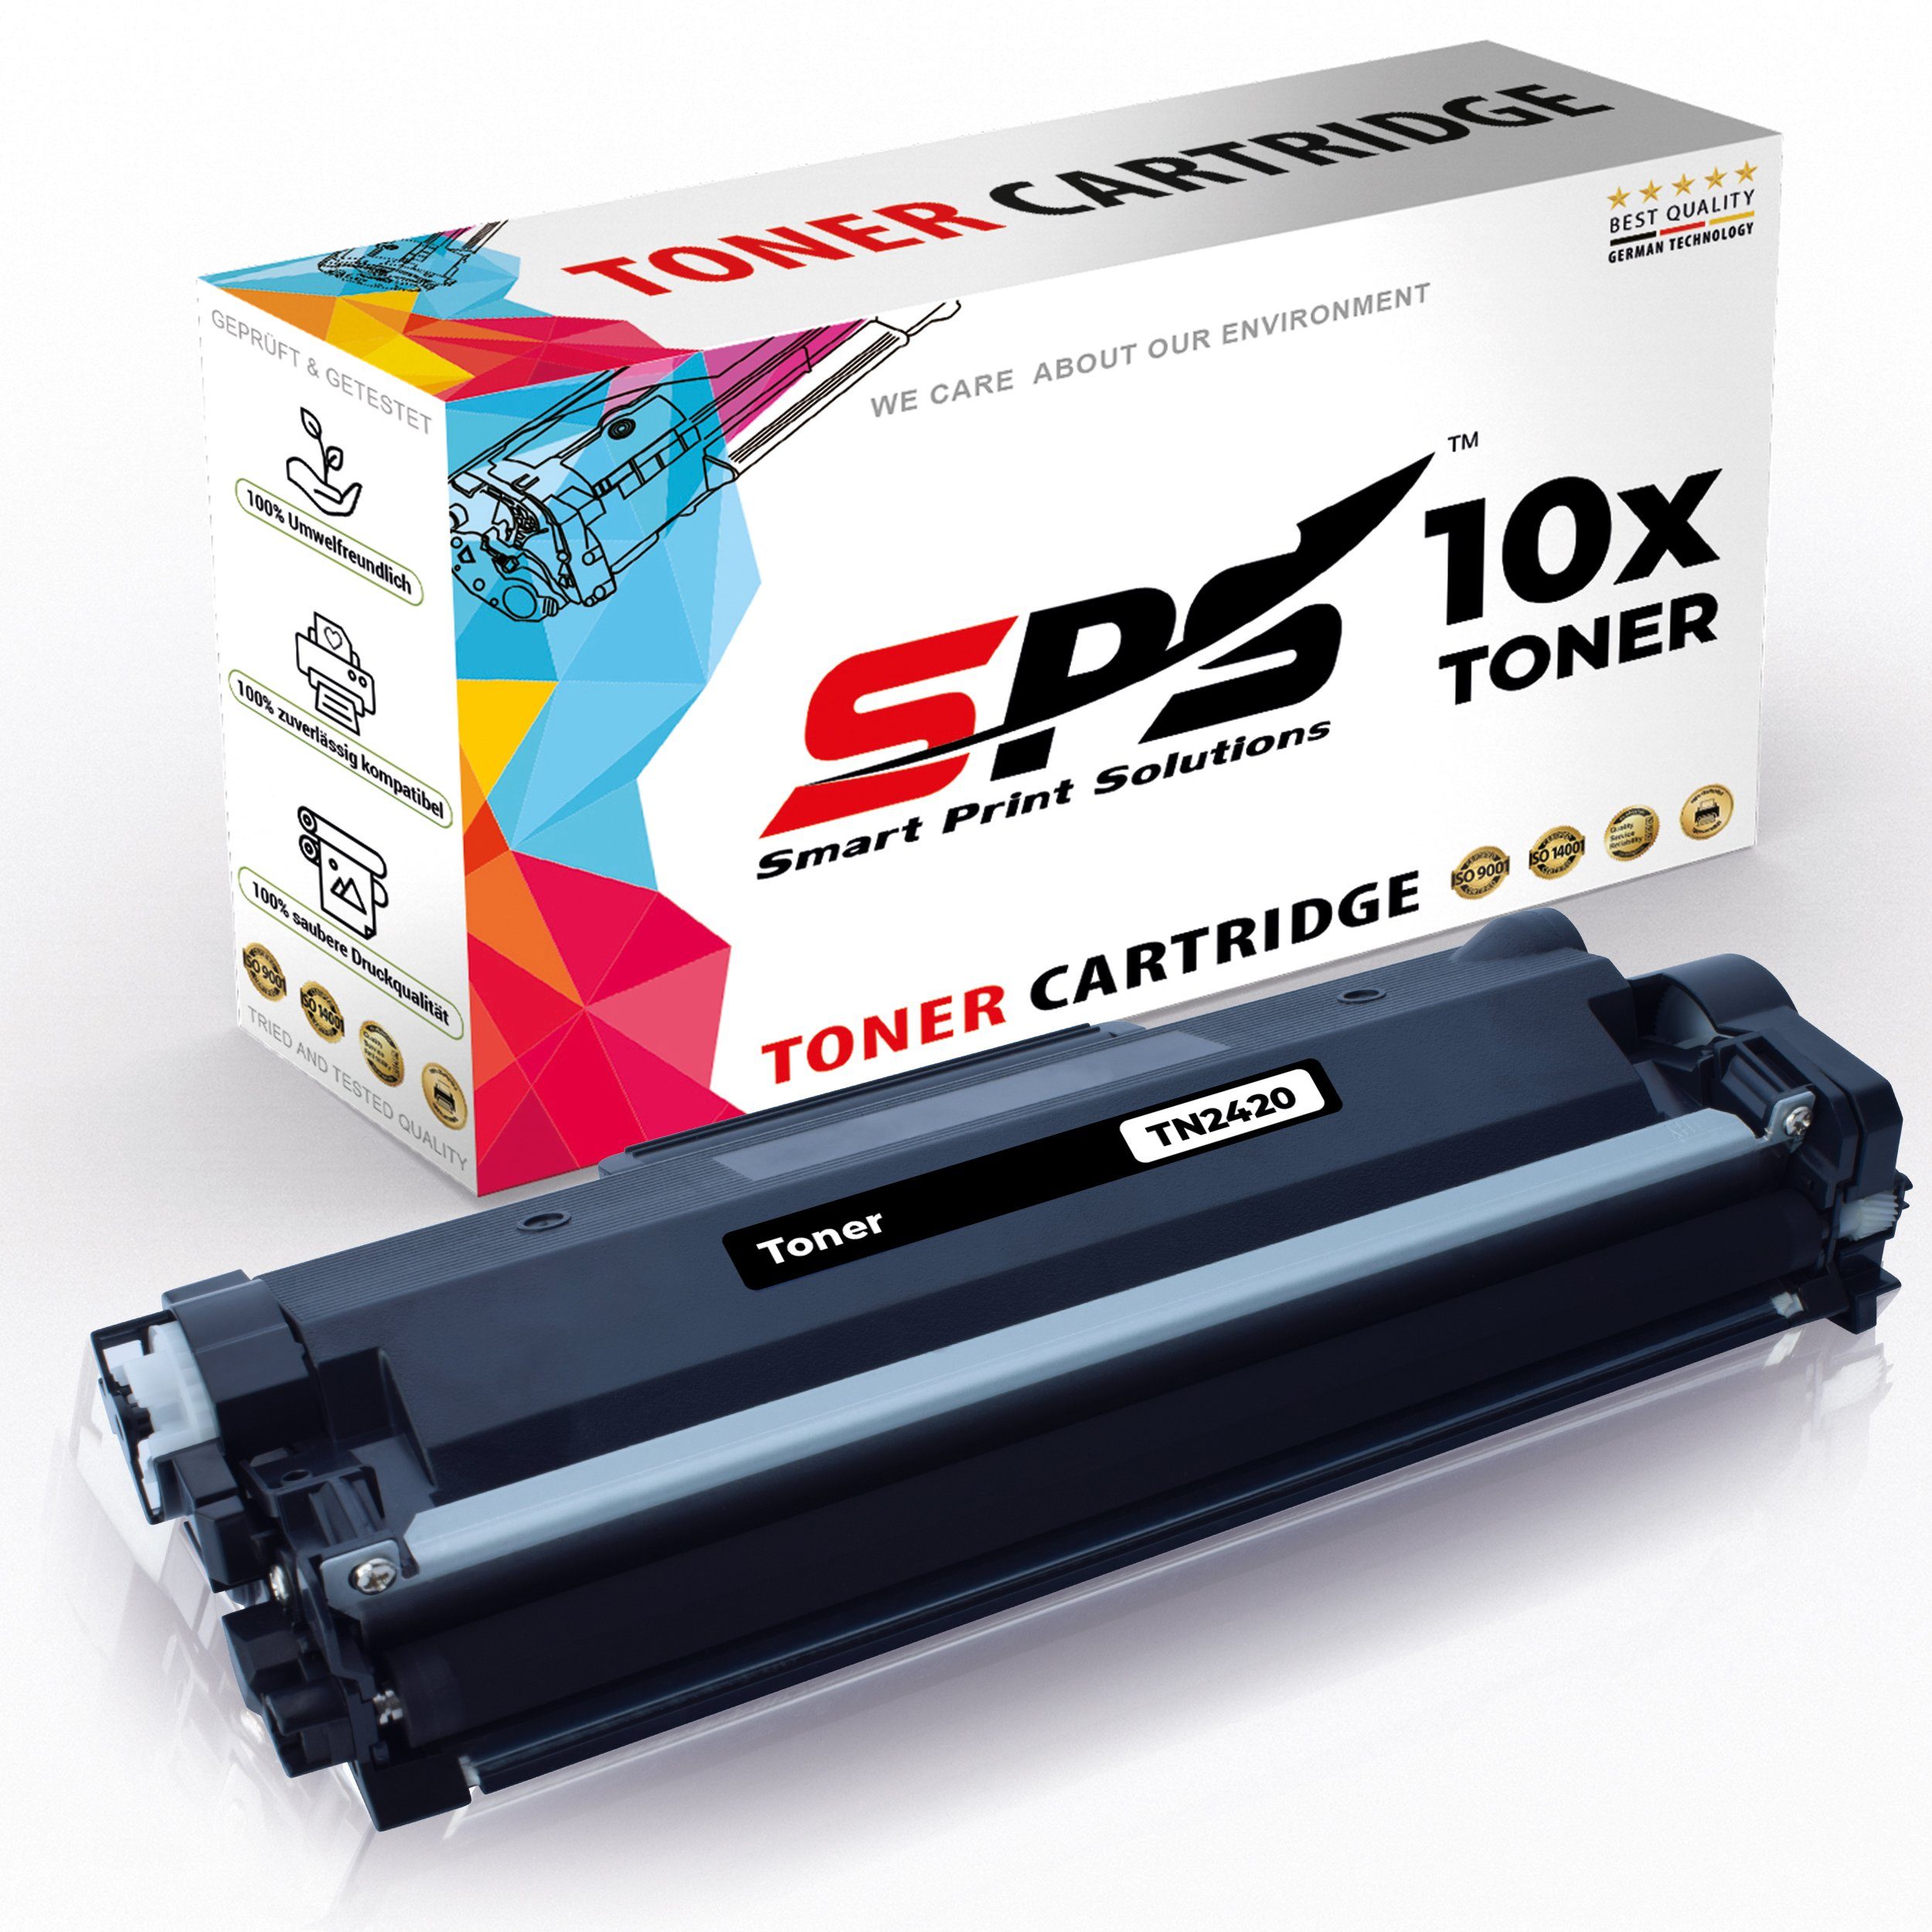 SPS Tonerkartusche Kompatibel für Brother DCP-L2510 TN-2420, (10er Pack) | Tonerpatronen